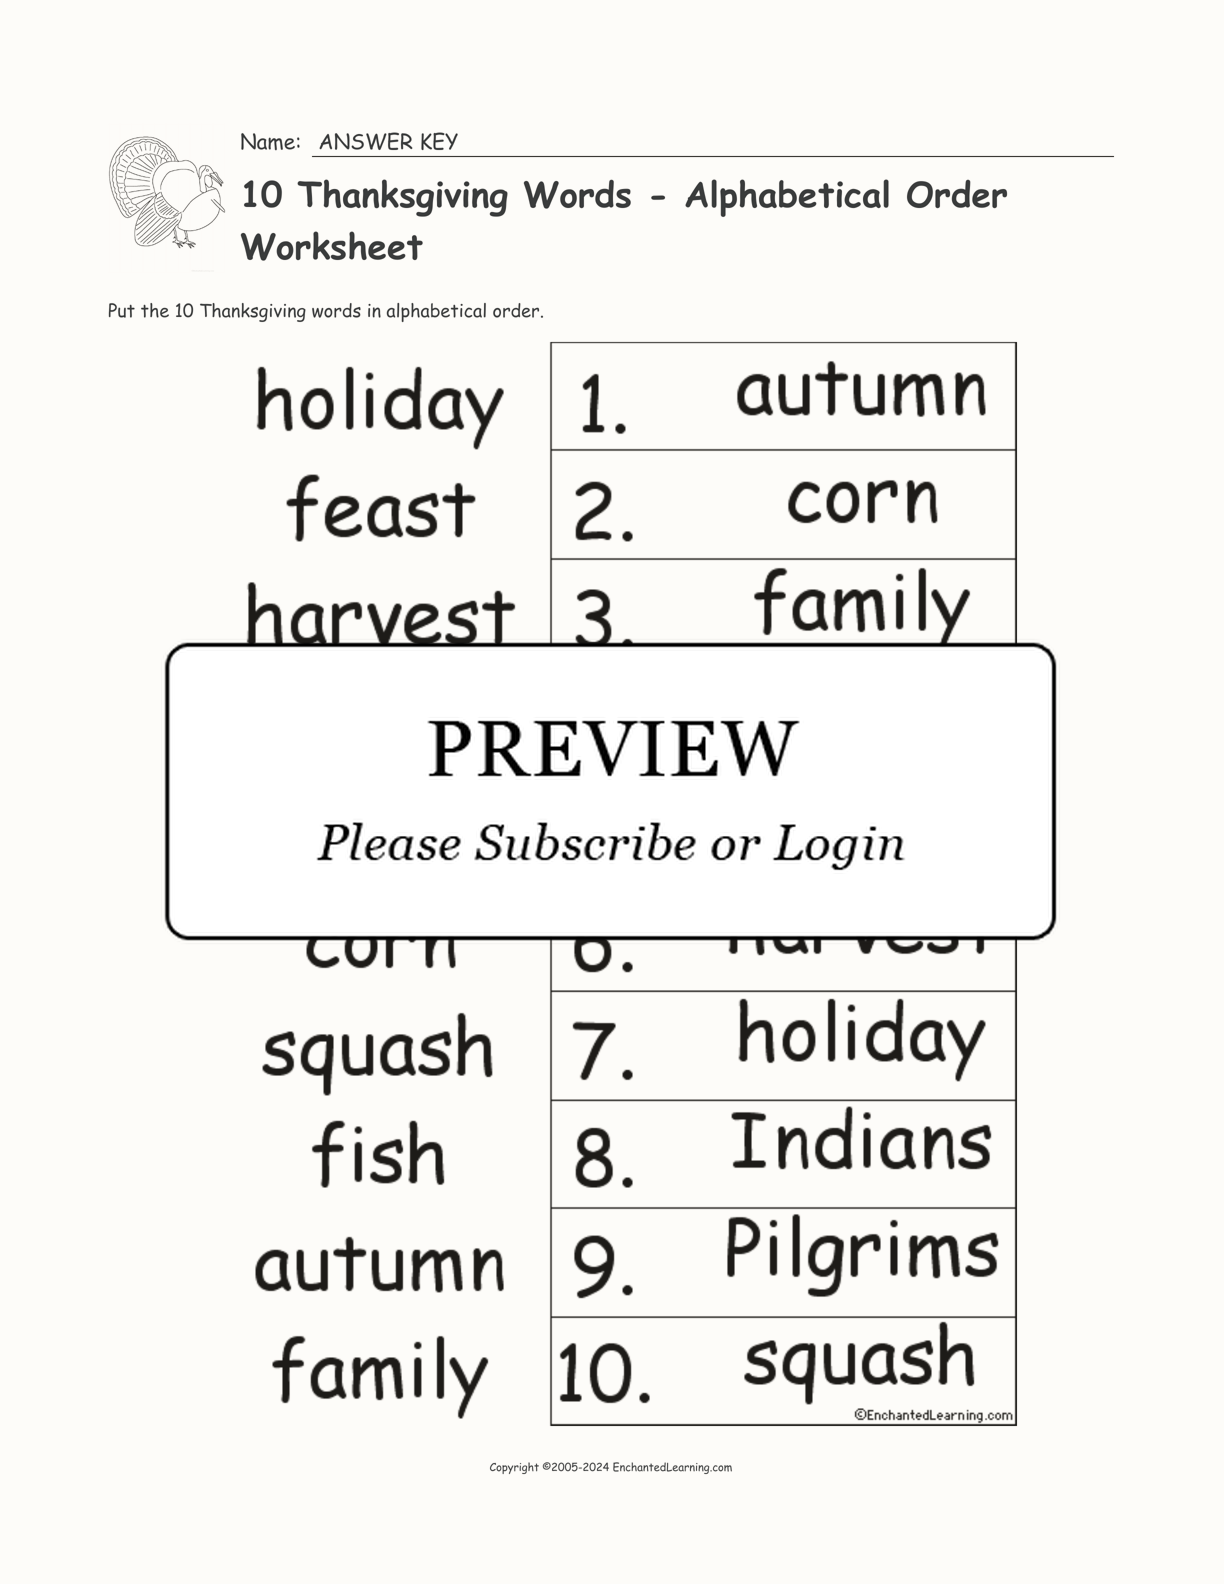 10 Thanksgiving Words - Alphabetical Order Worksheet interactive worksheet page 2